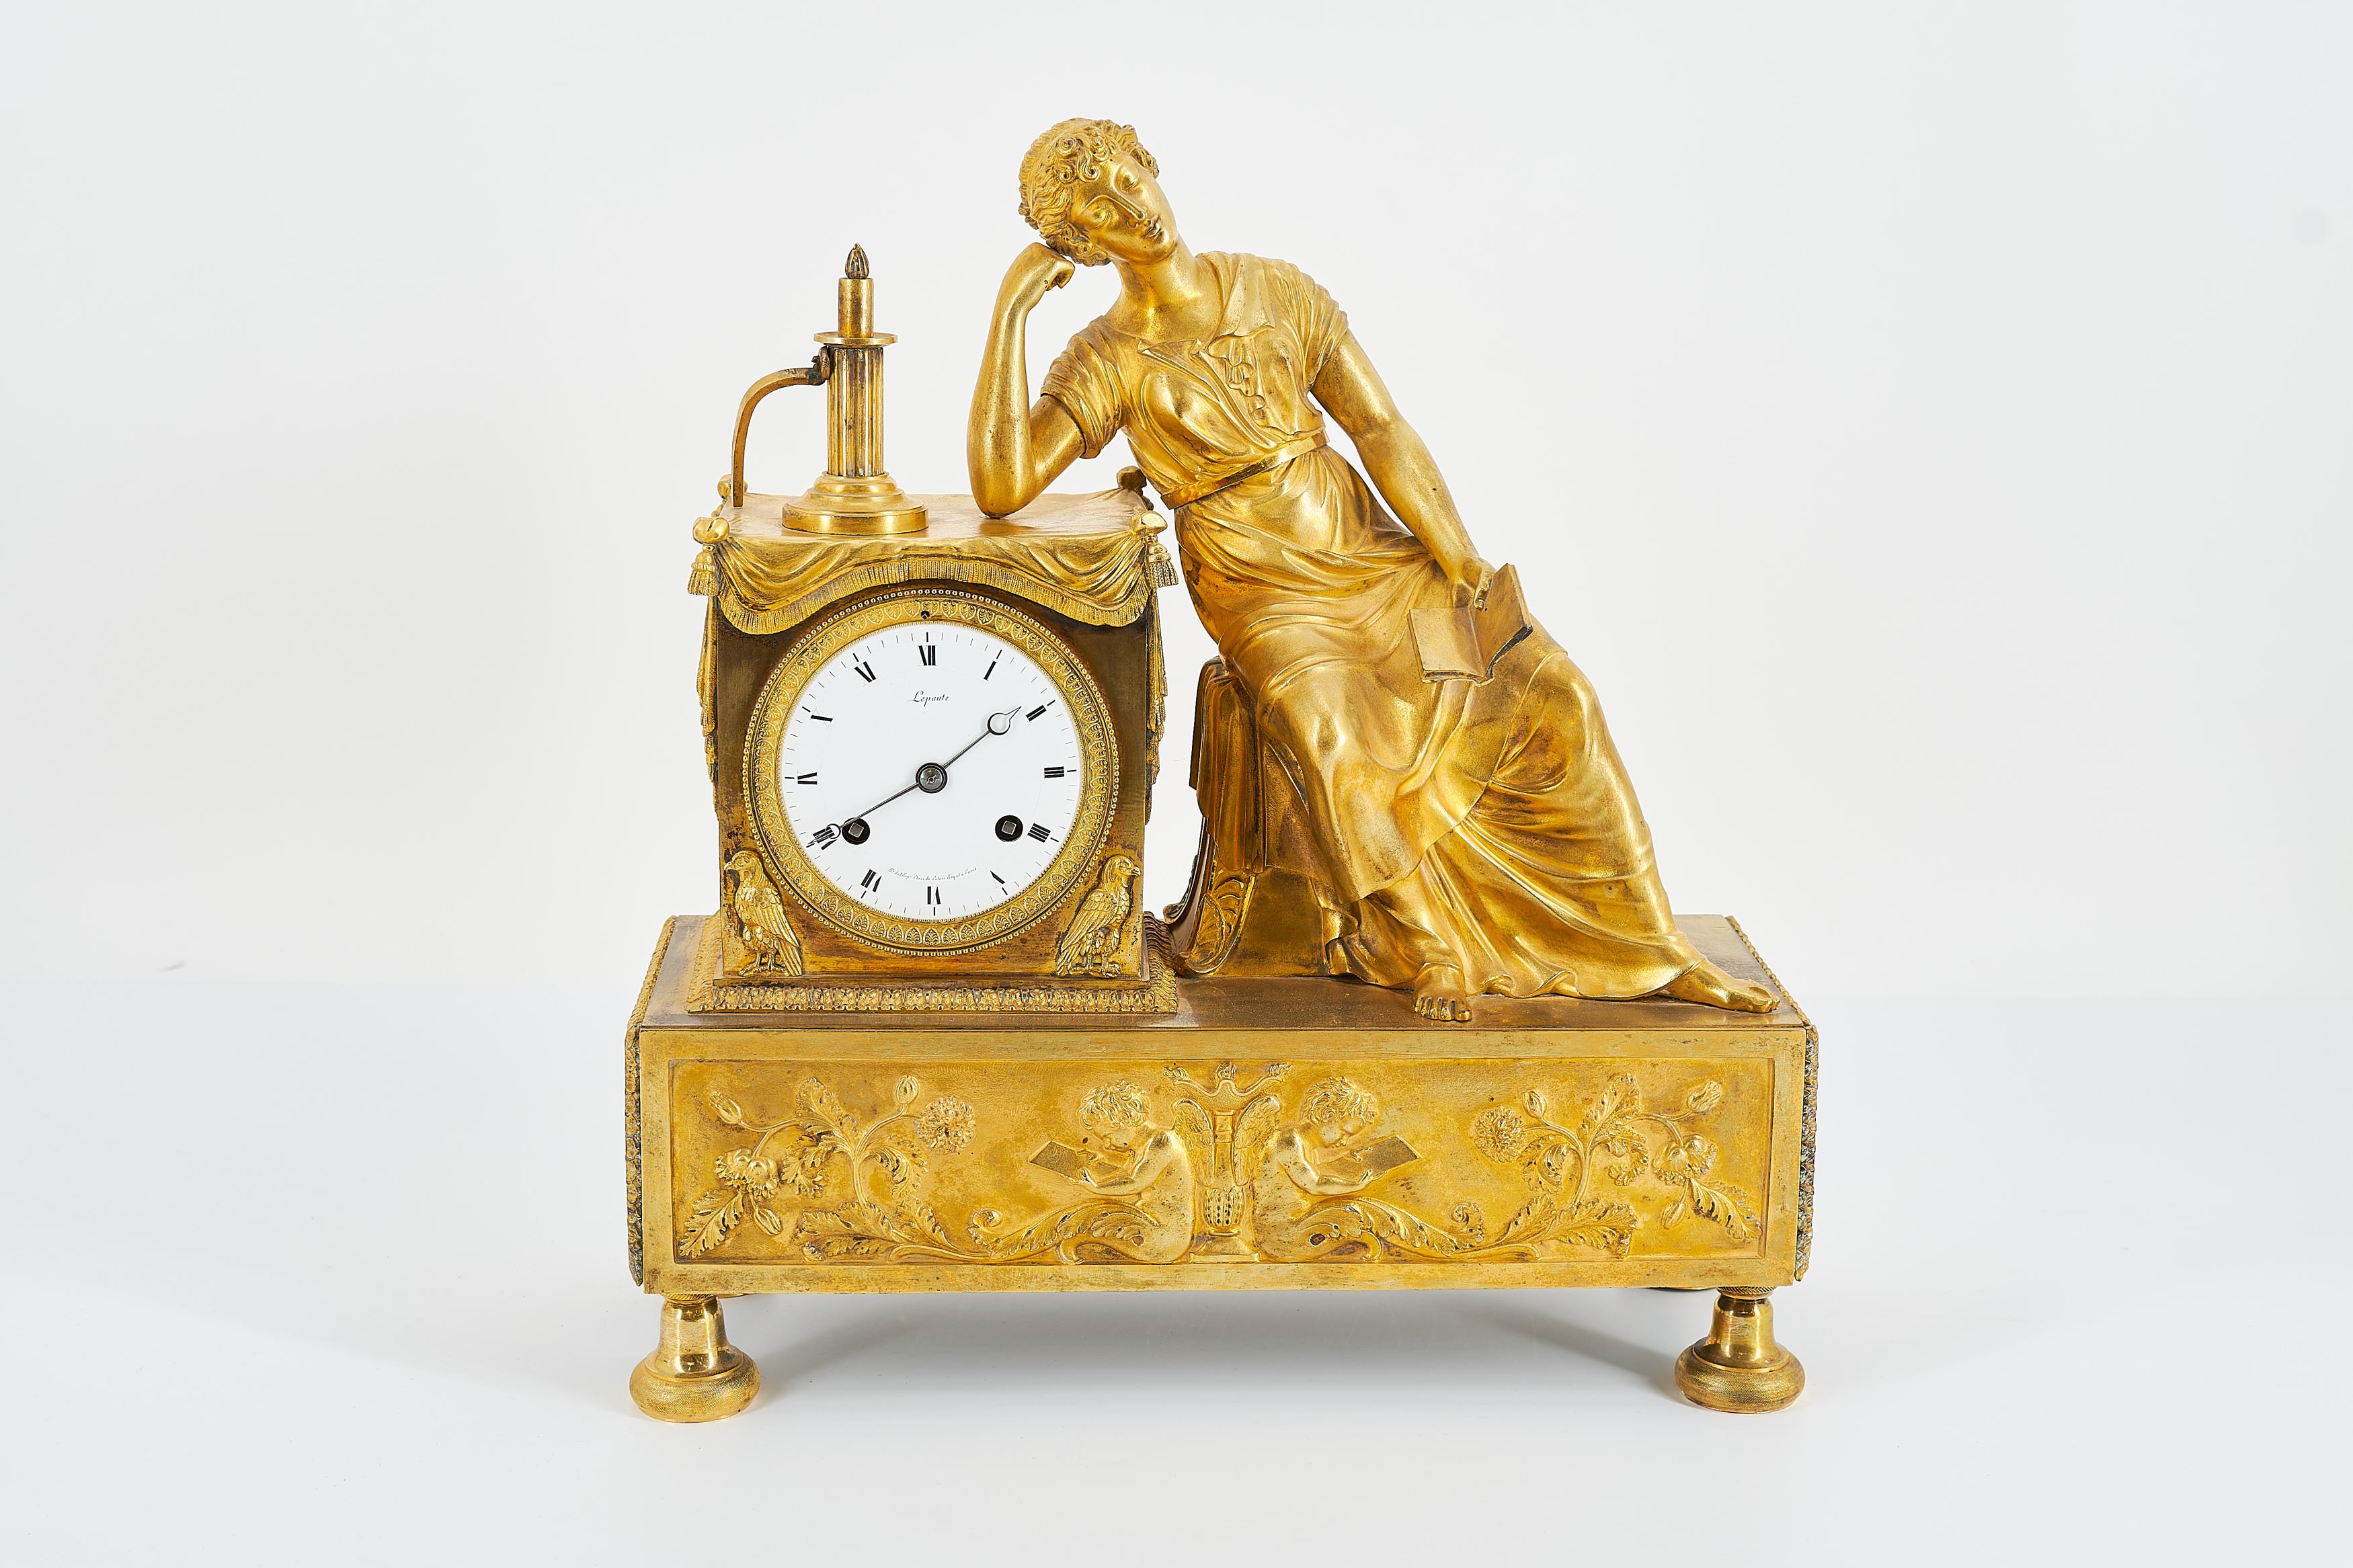 Empire pendulum clock with sleeping lady - Image 2 of 5